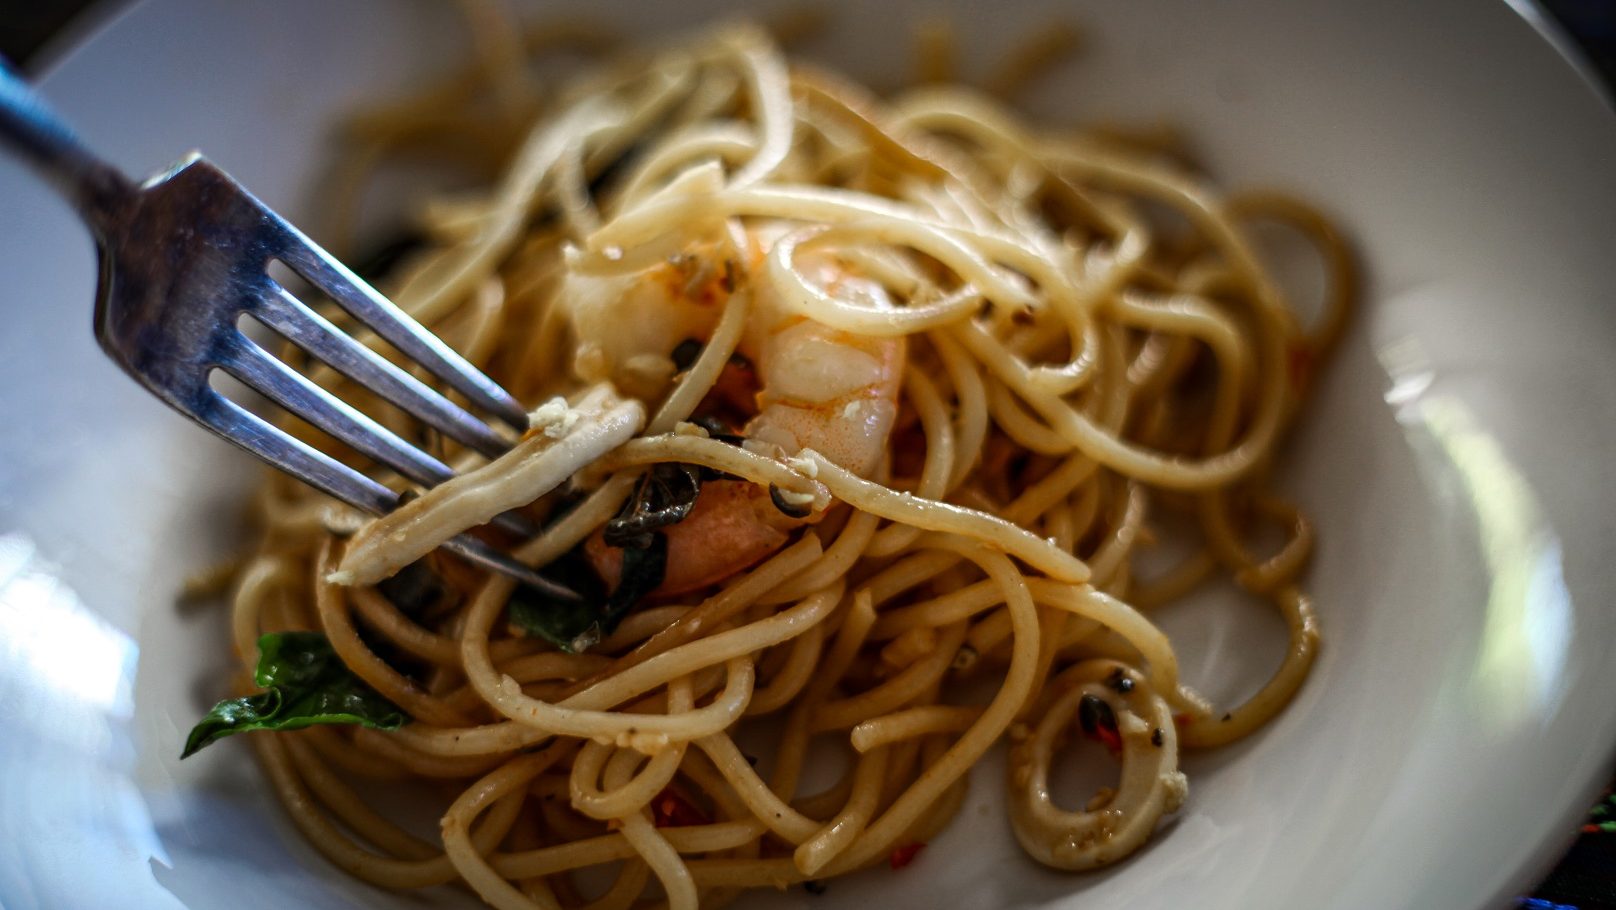 drunken noodles with pasta